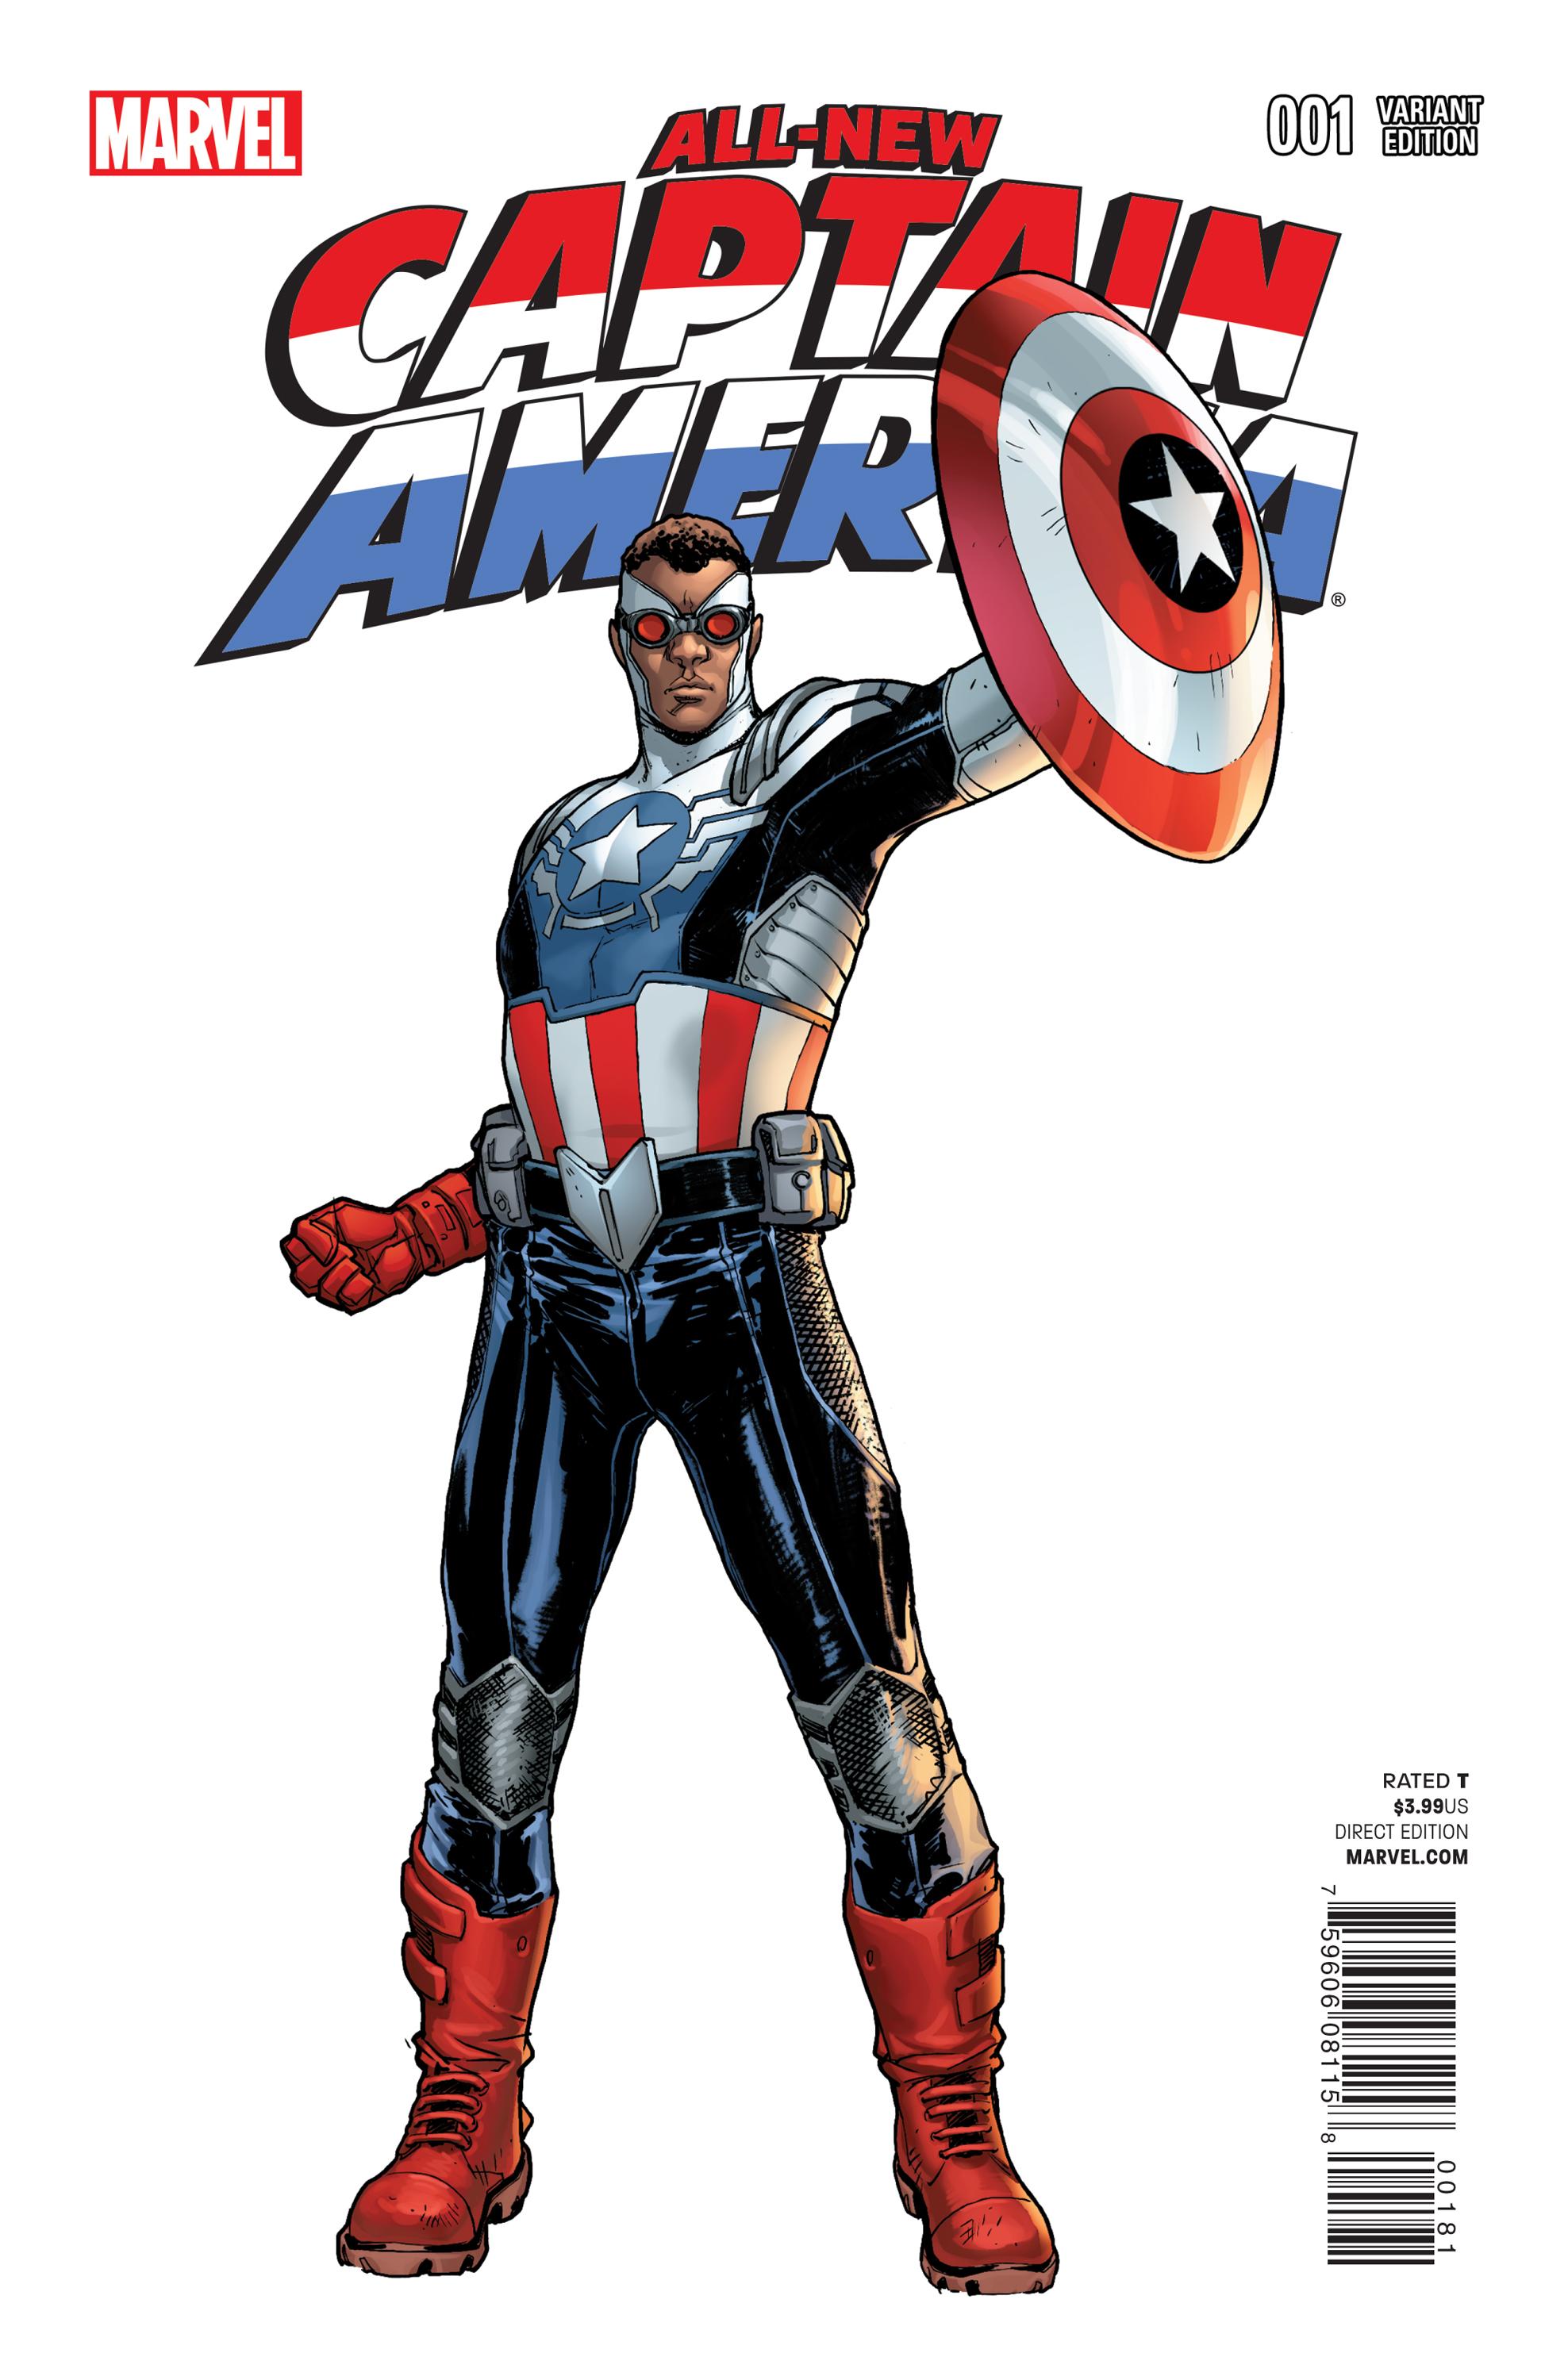 Black Captain America leading comic book diversity - Washington Times